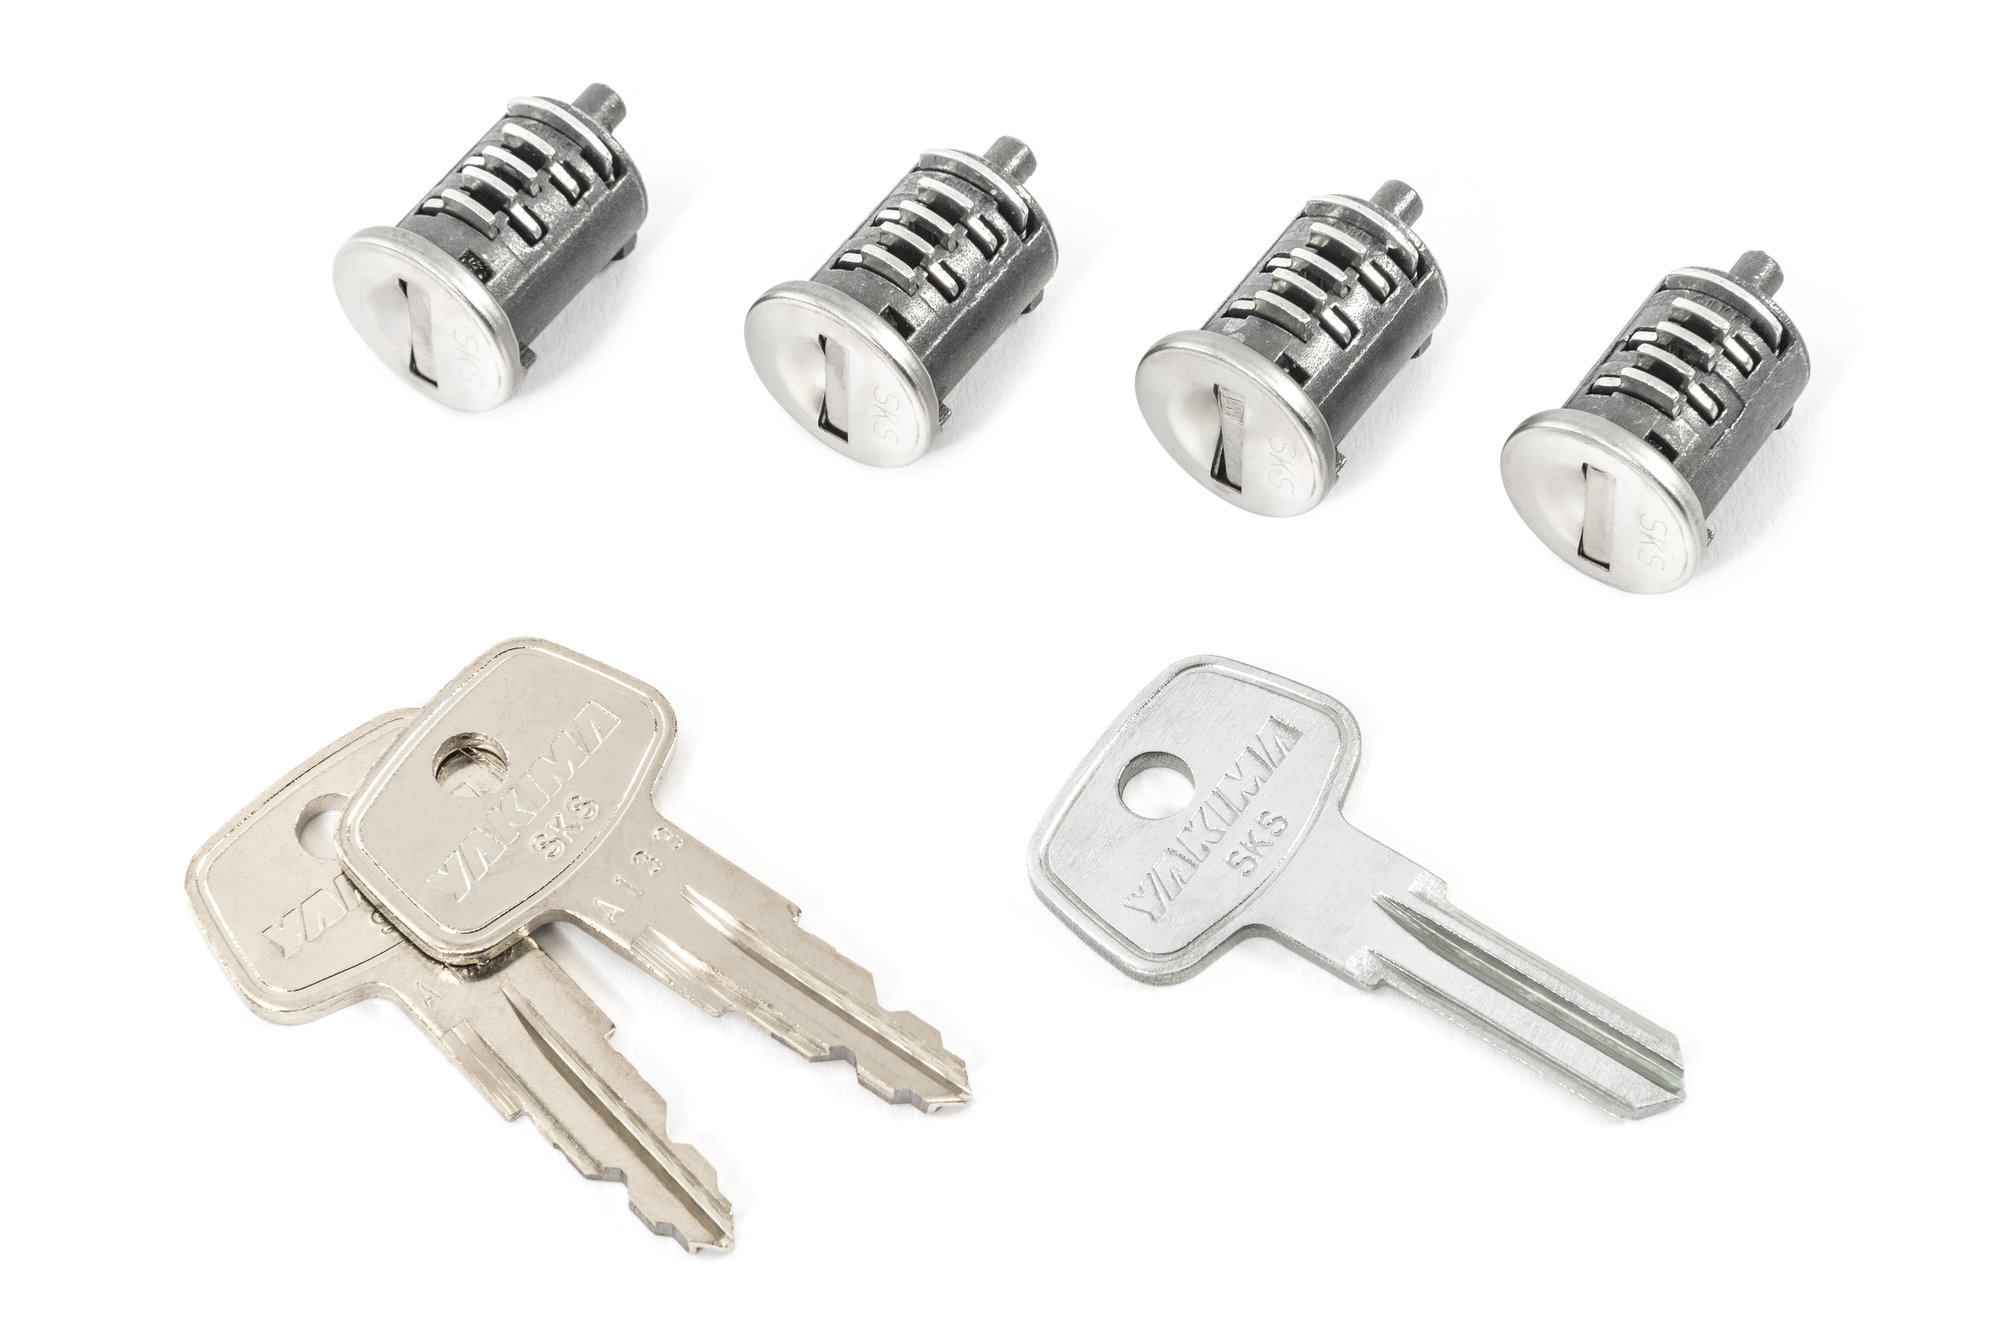 NEW Yakima SKS Lock Core with Key 4-Pack 